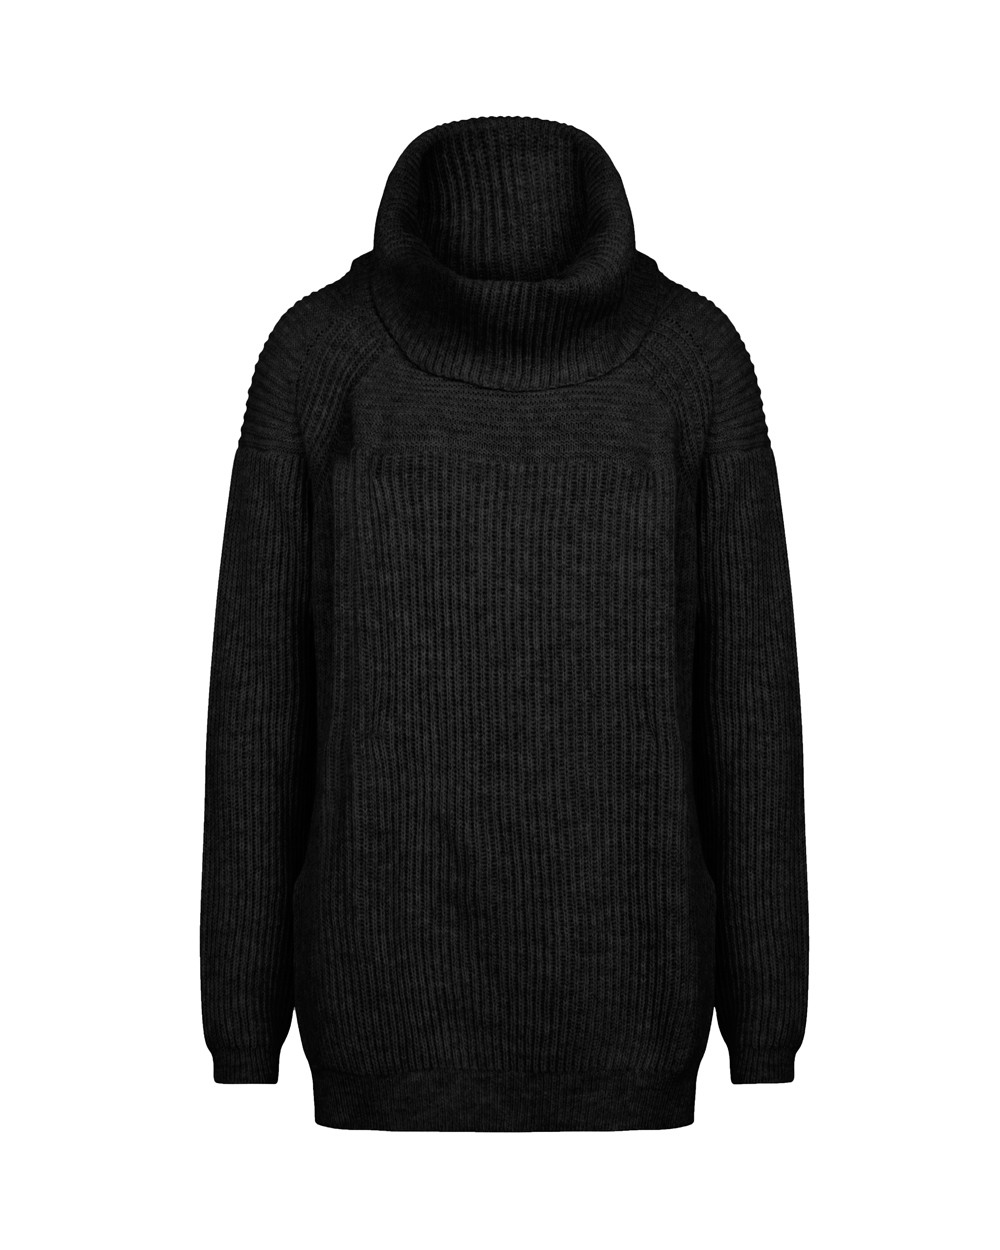 Cushy Sweater, $299, from Moochi